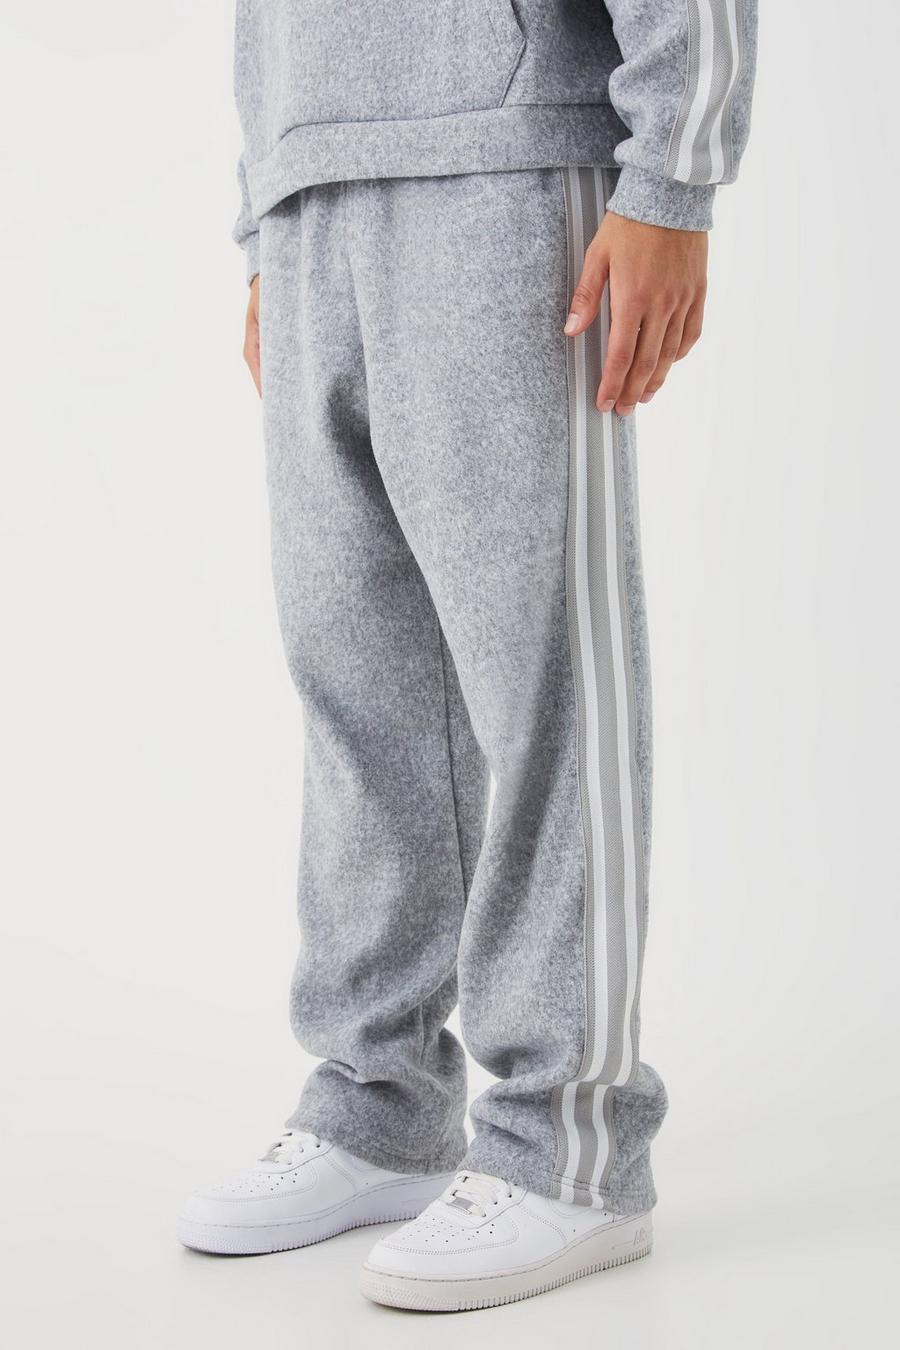 Pantaloni tuta rilassati pesanti spazzolati con striscia, Grey marl image number 1